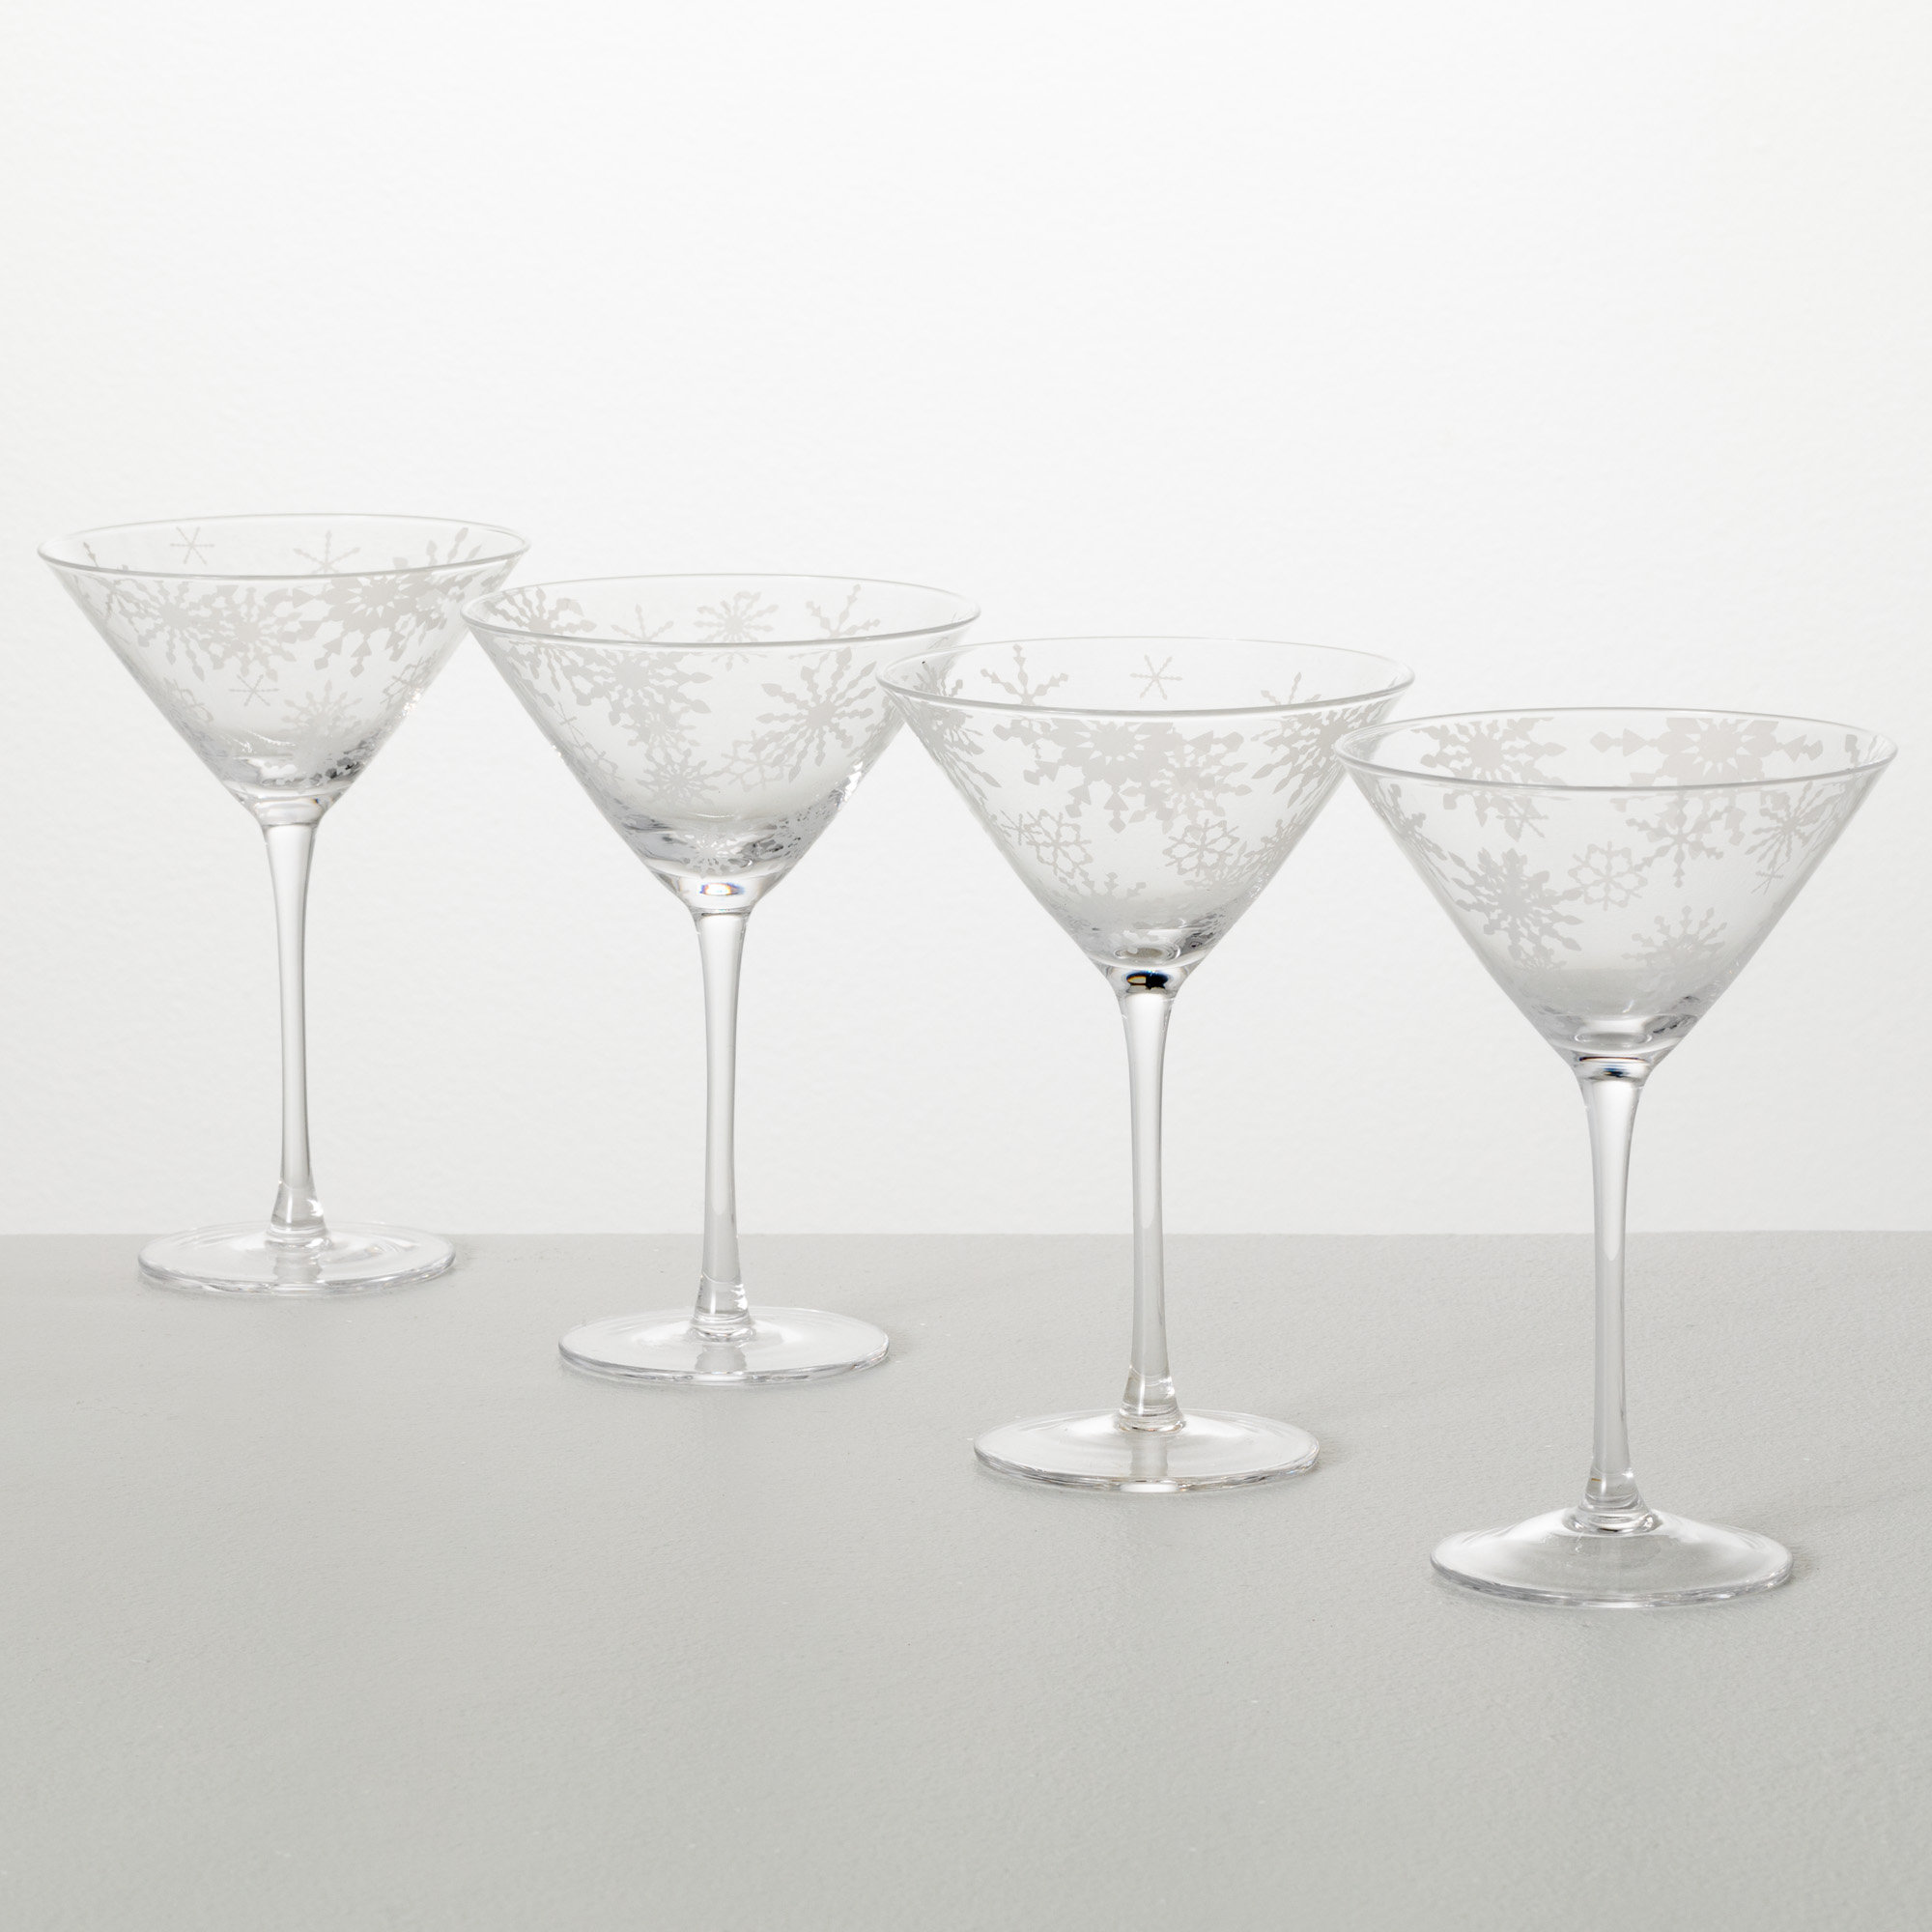 4 Piece Festivity Martini Glass Set